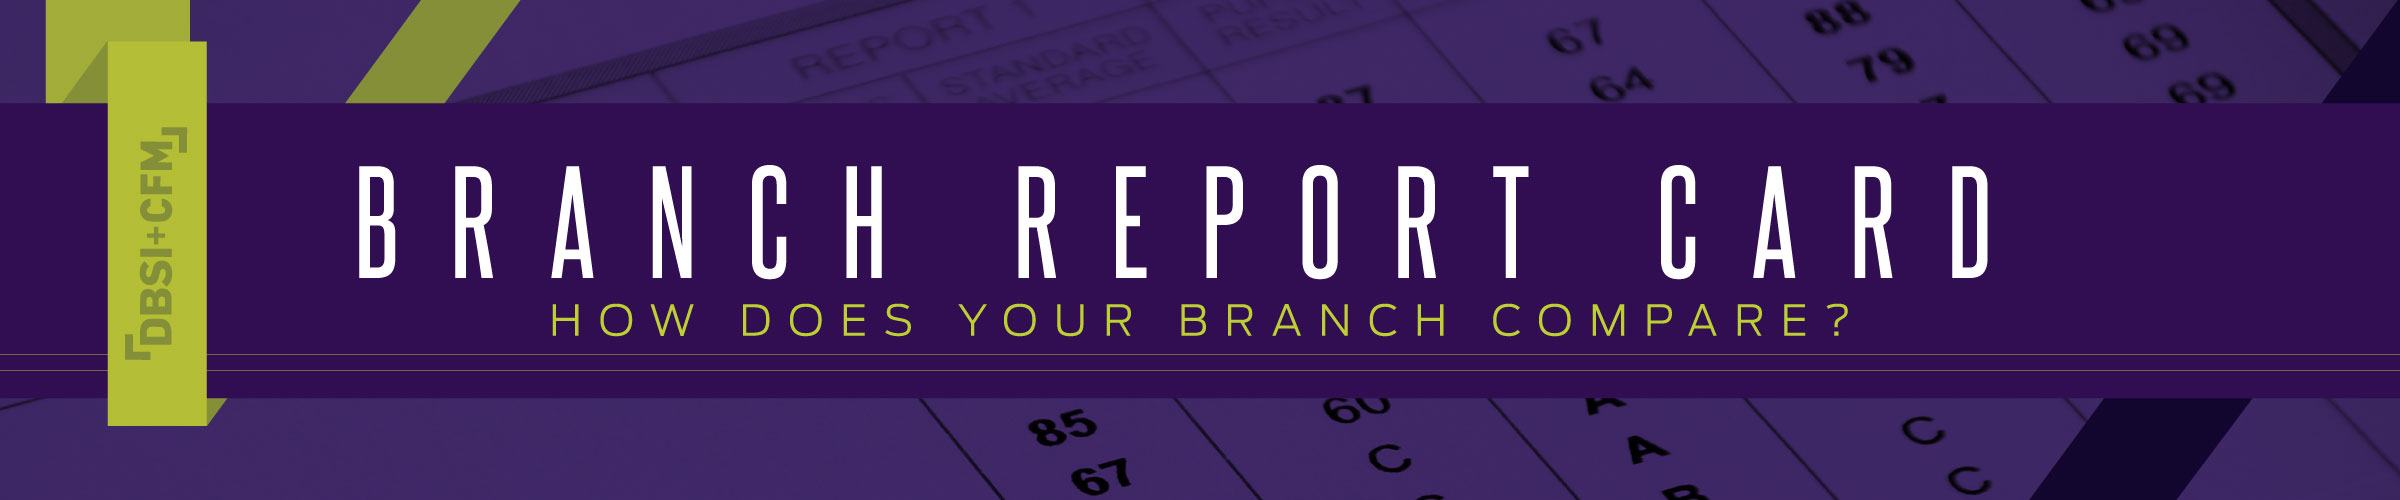 Branch-Reportcard-2400x500